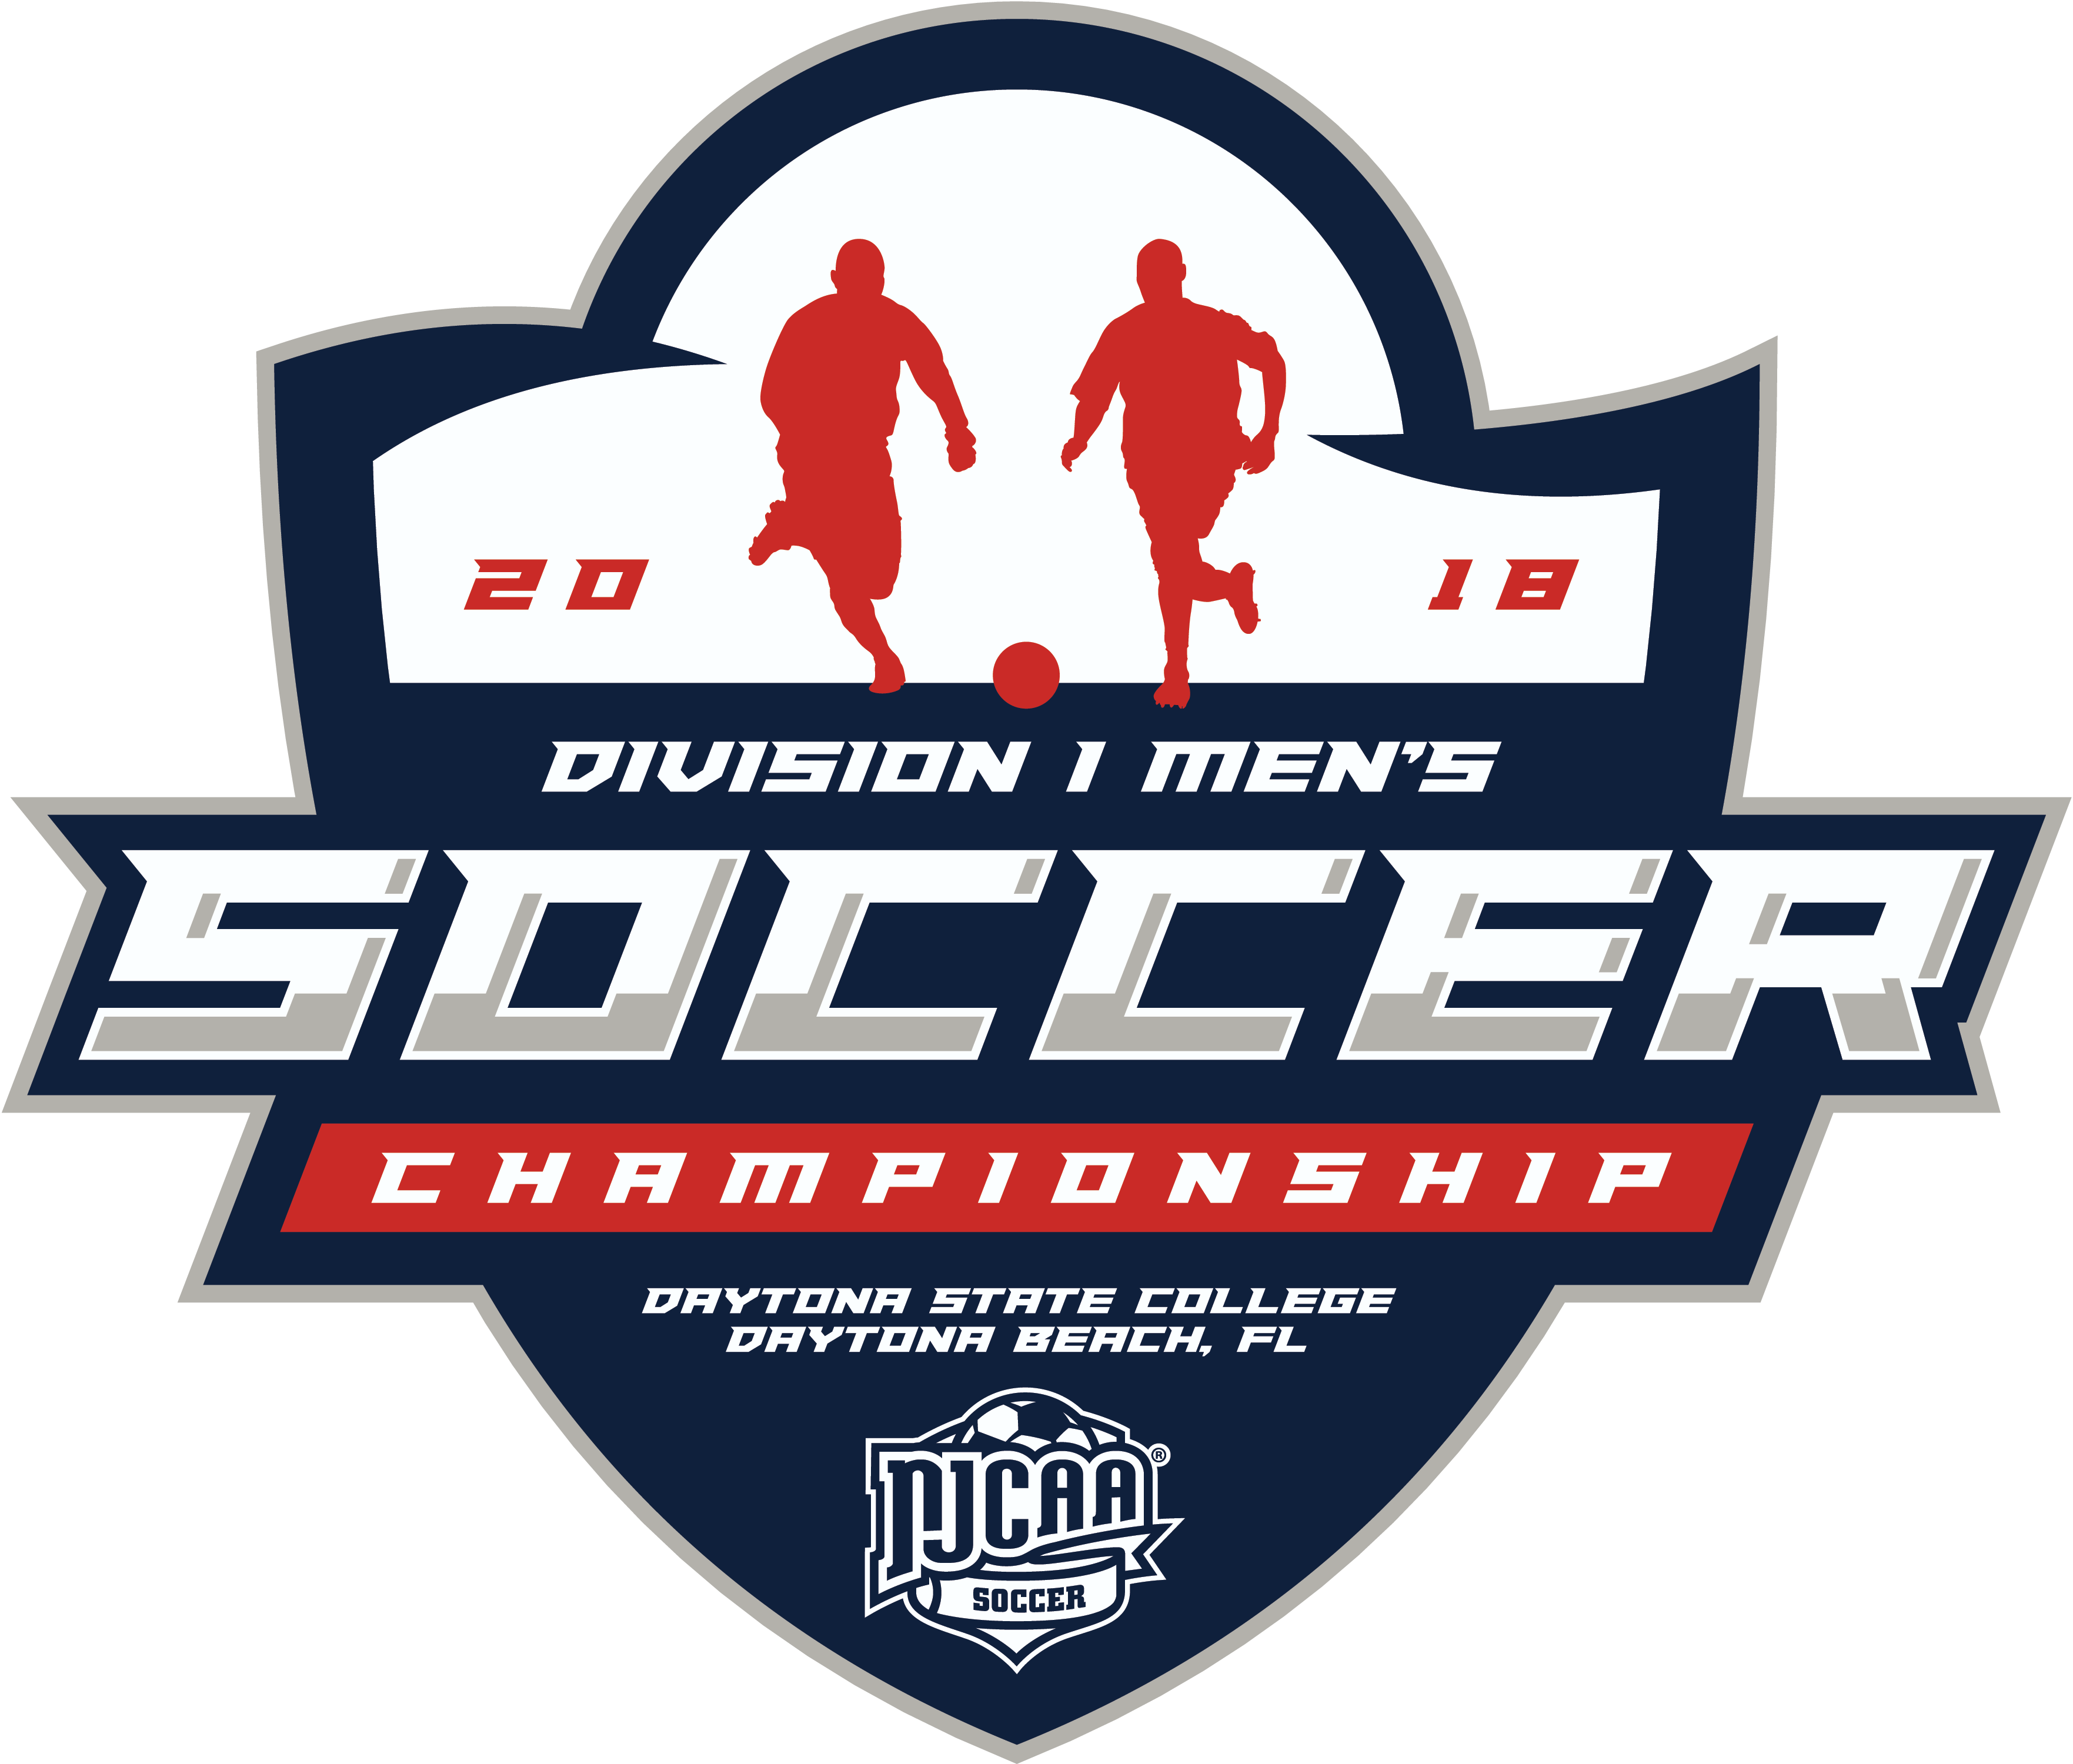 image of the 2018 NJCAA men's d-1 soccer championship logo